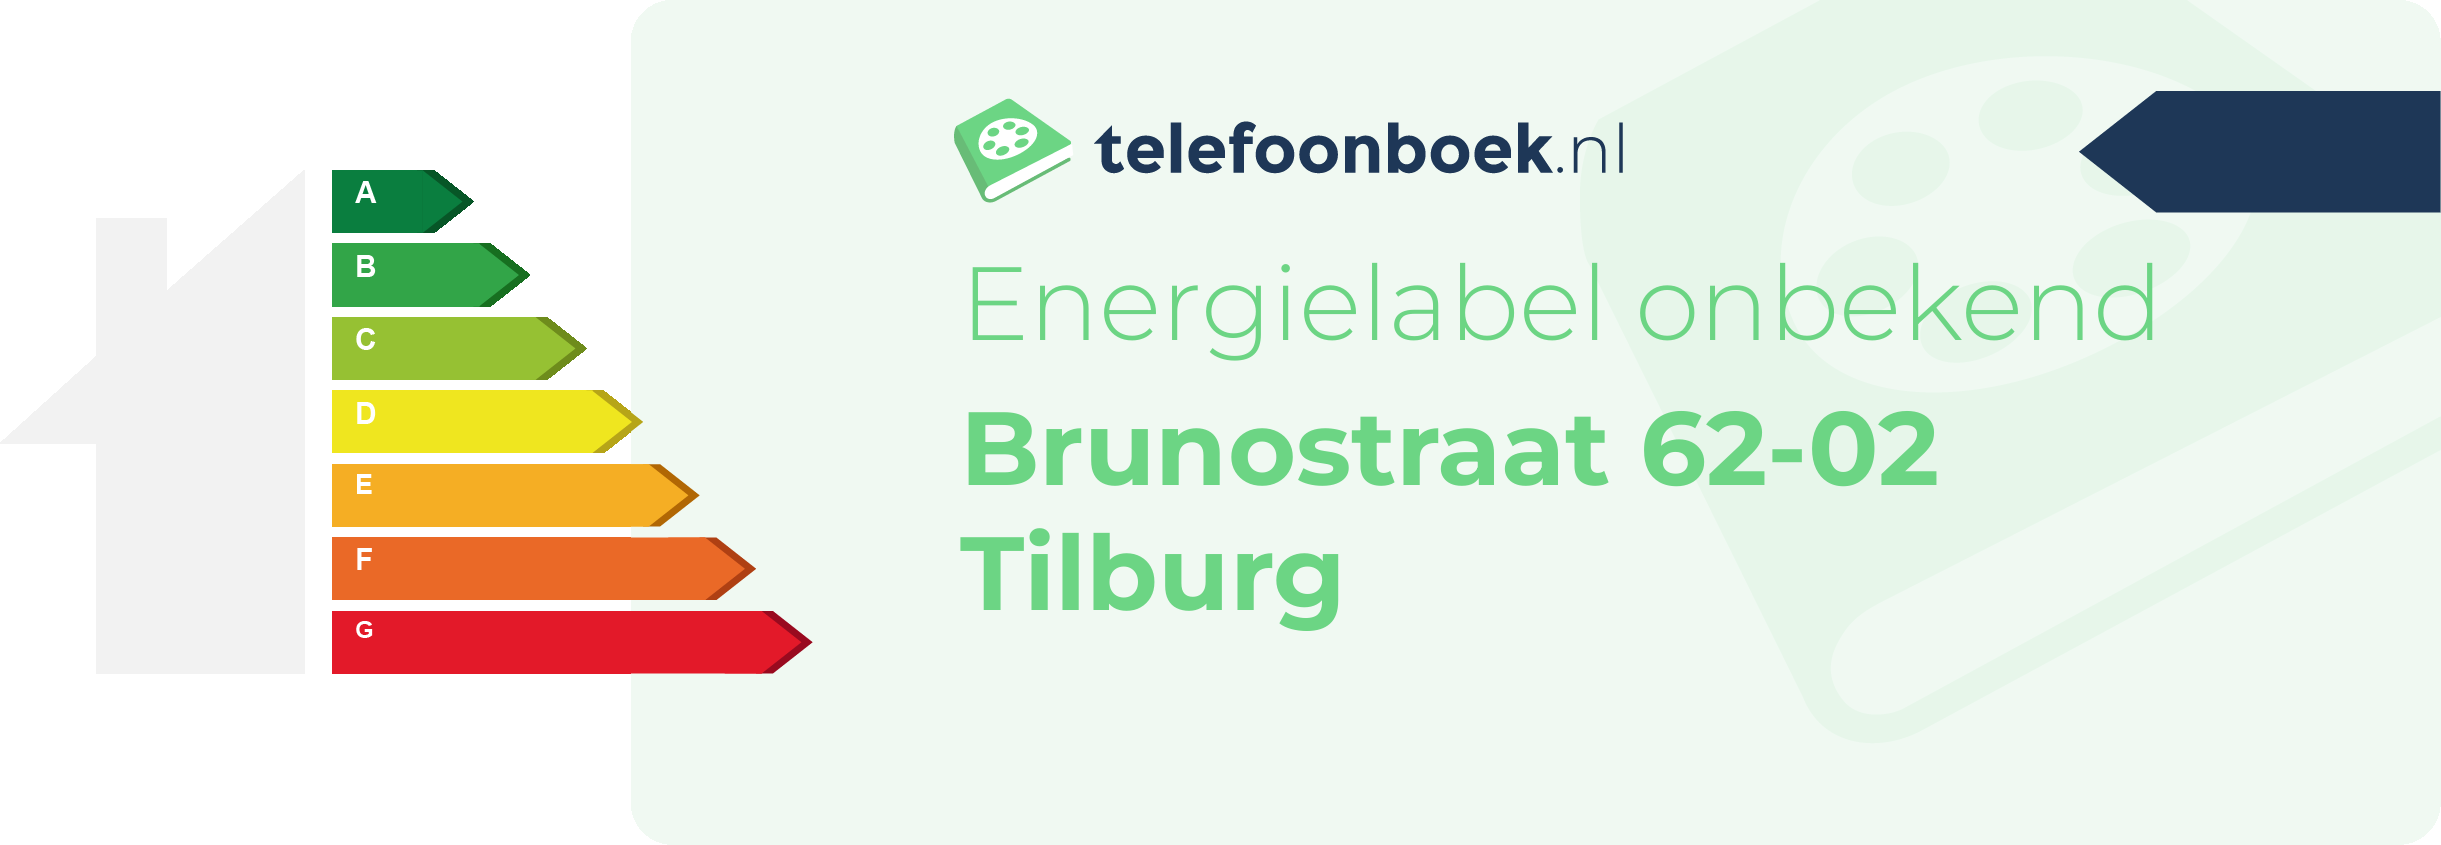 Energielabel Brunostraat 62-02 Tilburg